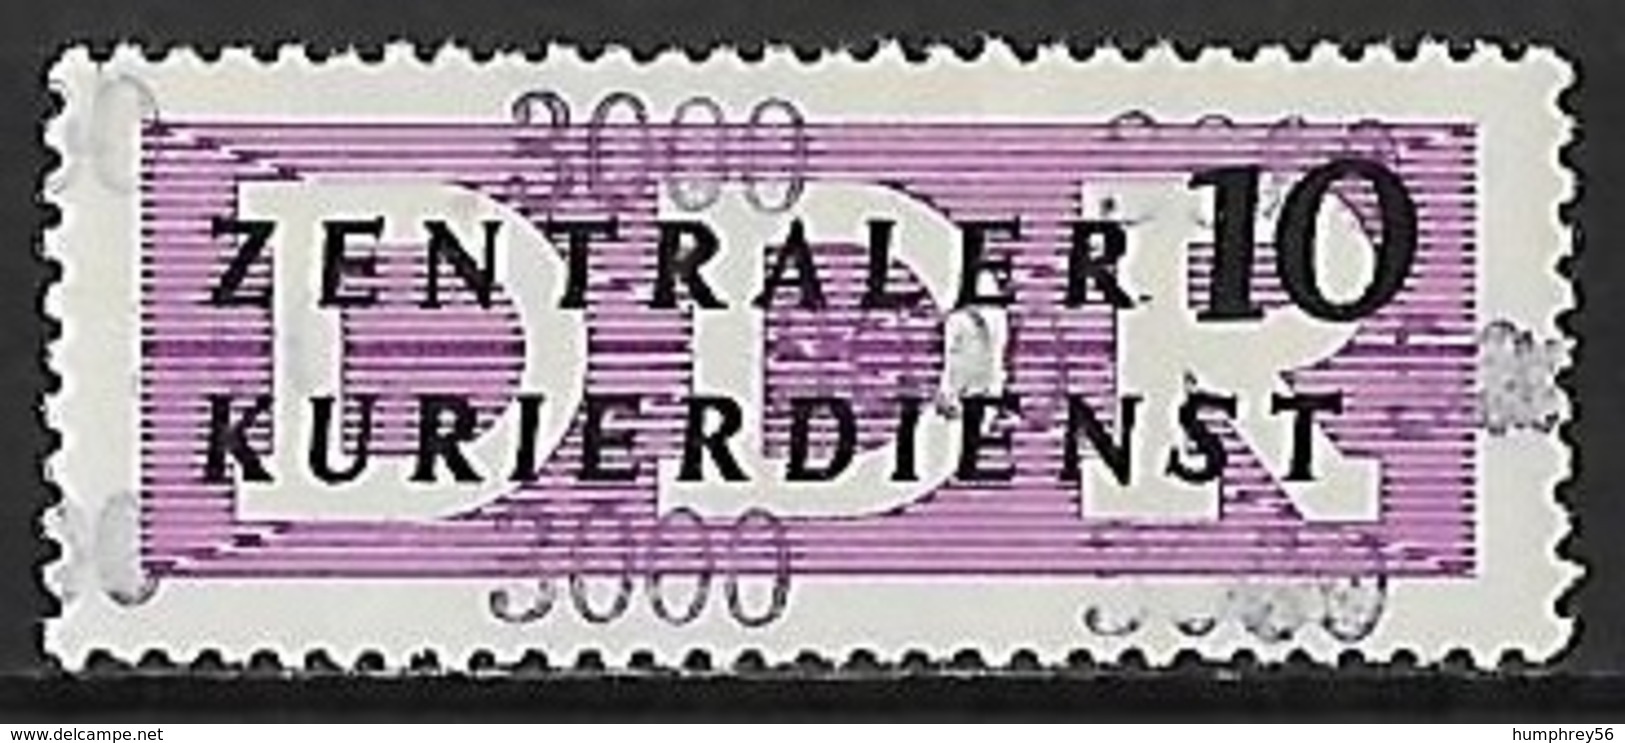 1957 - DDR - Michel 10 [Dienstmarken B + 3000] - Mint